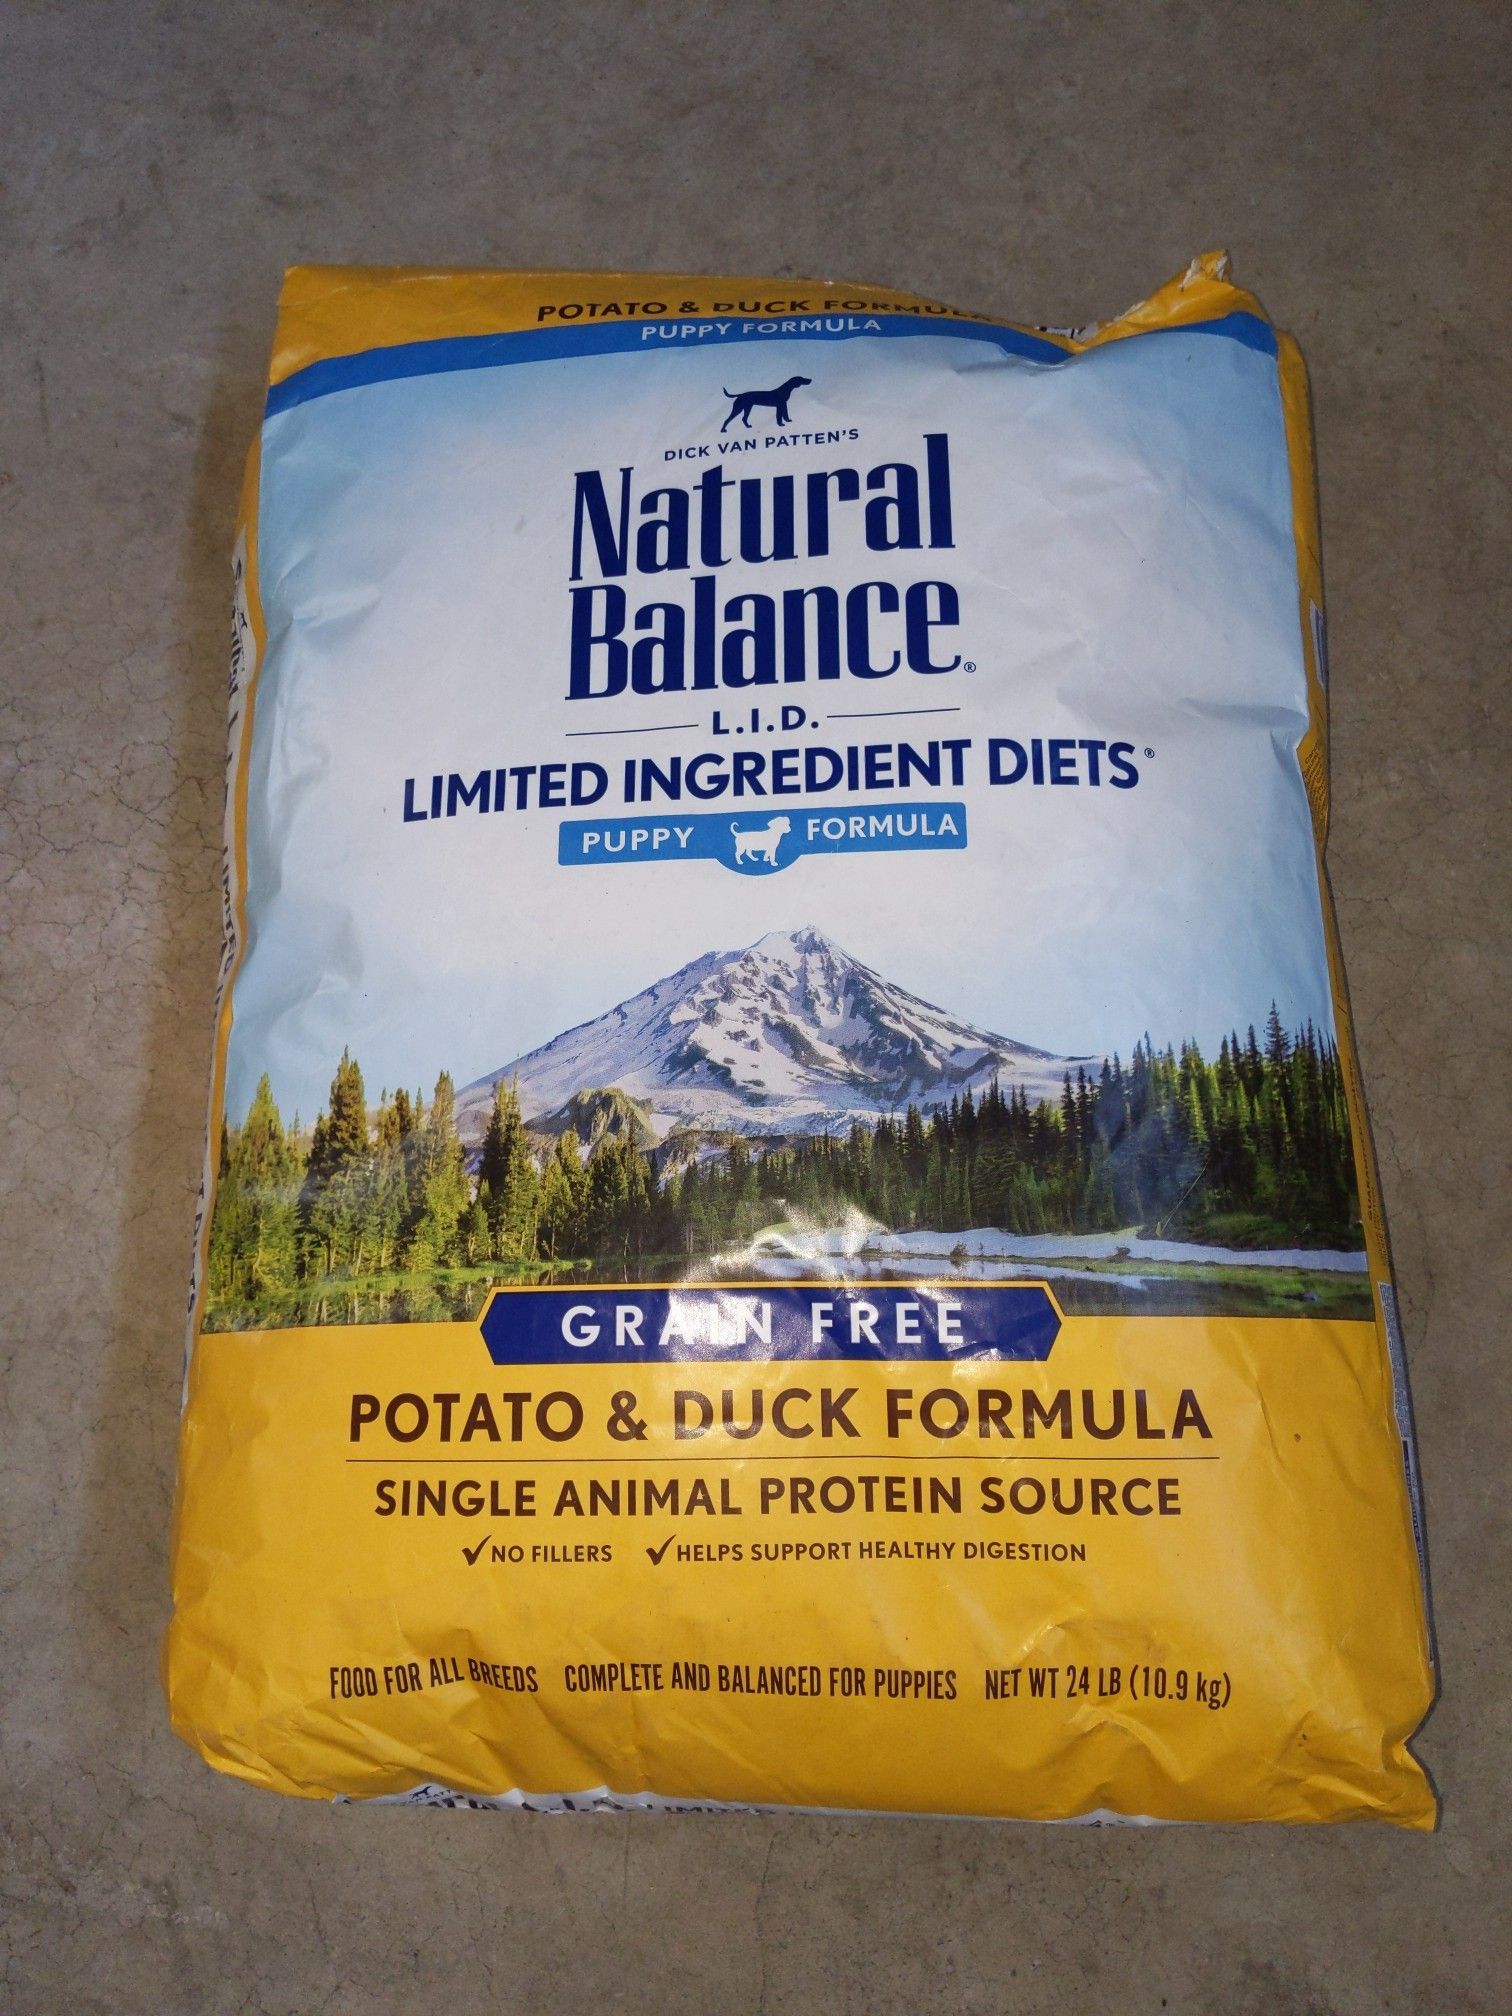 Natural Balance Grain Free Potato & Duck Formula for Puppies, 24 lbs.